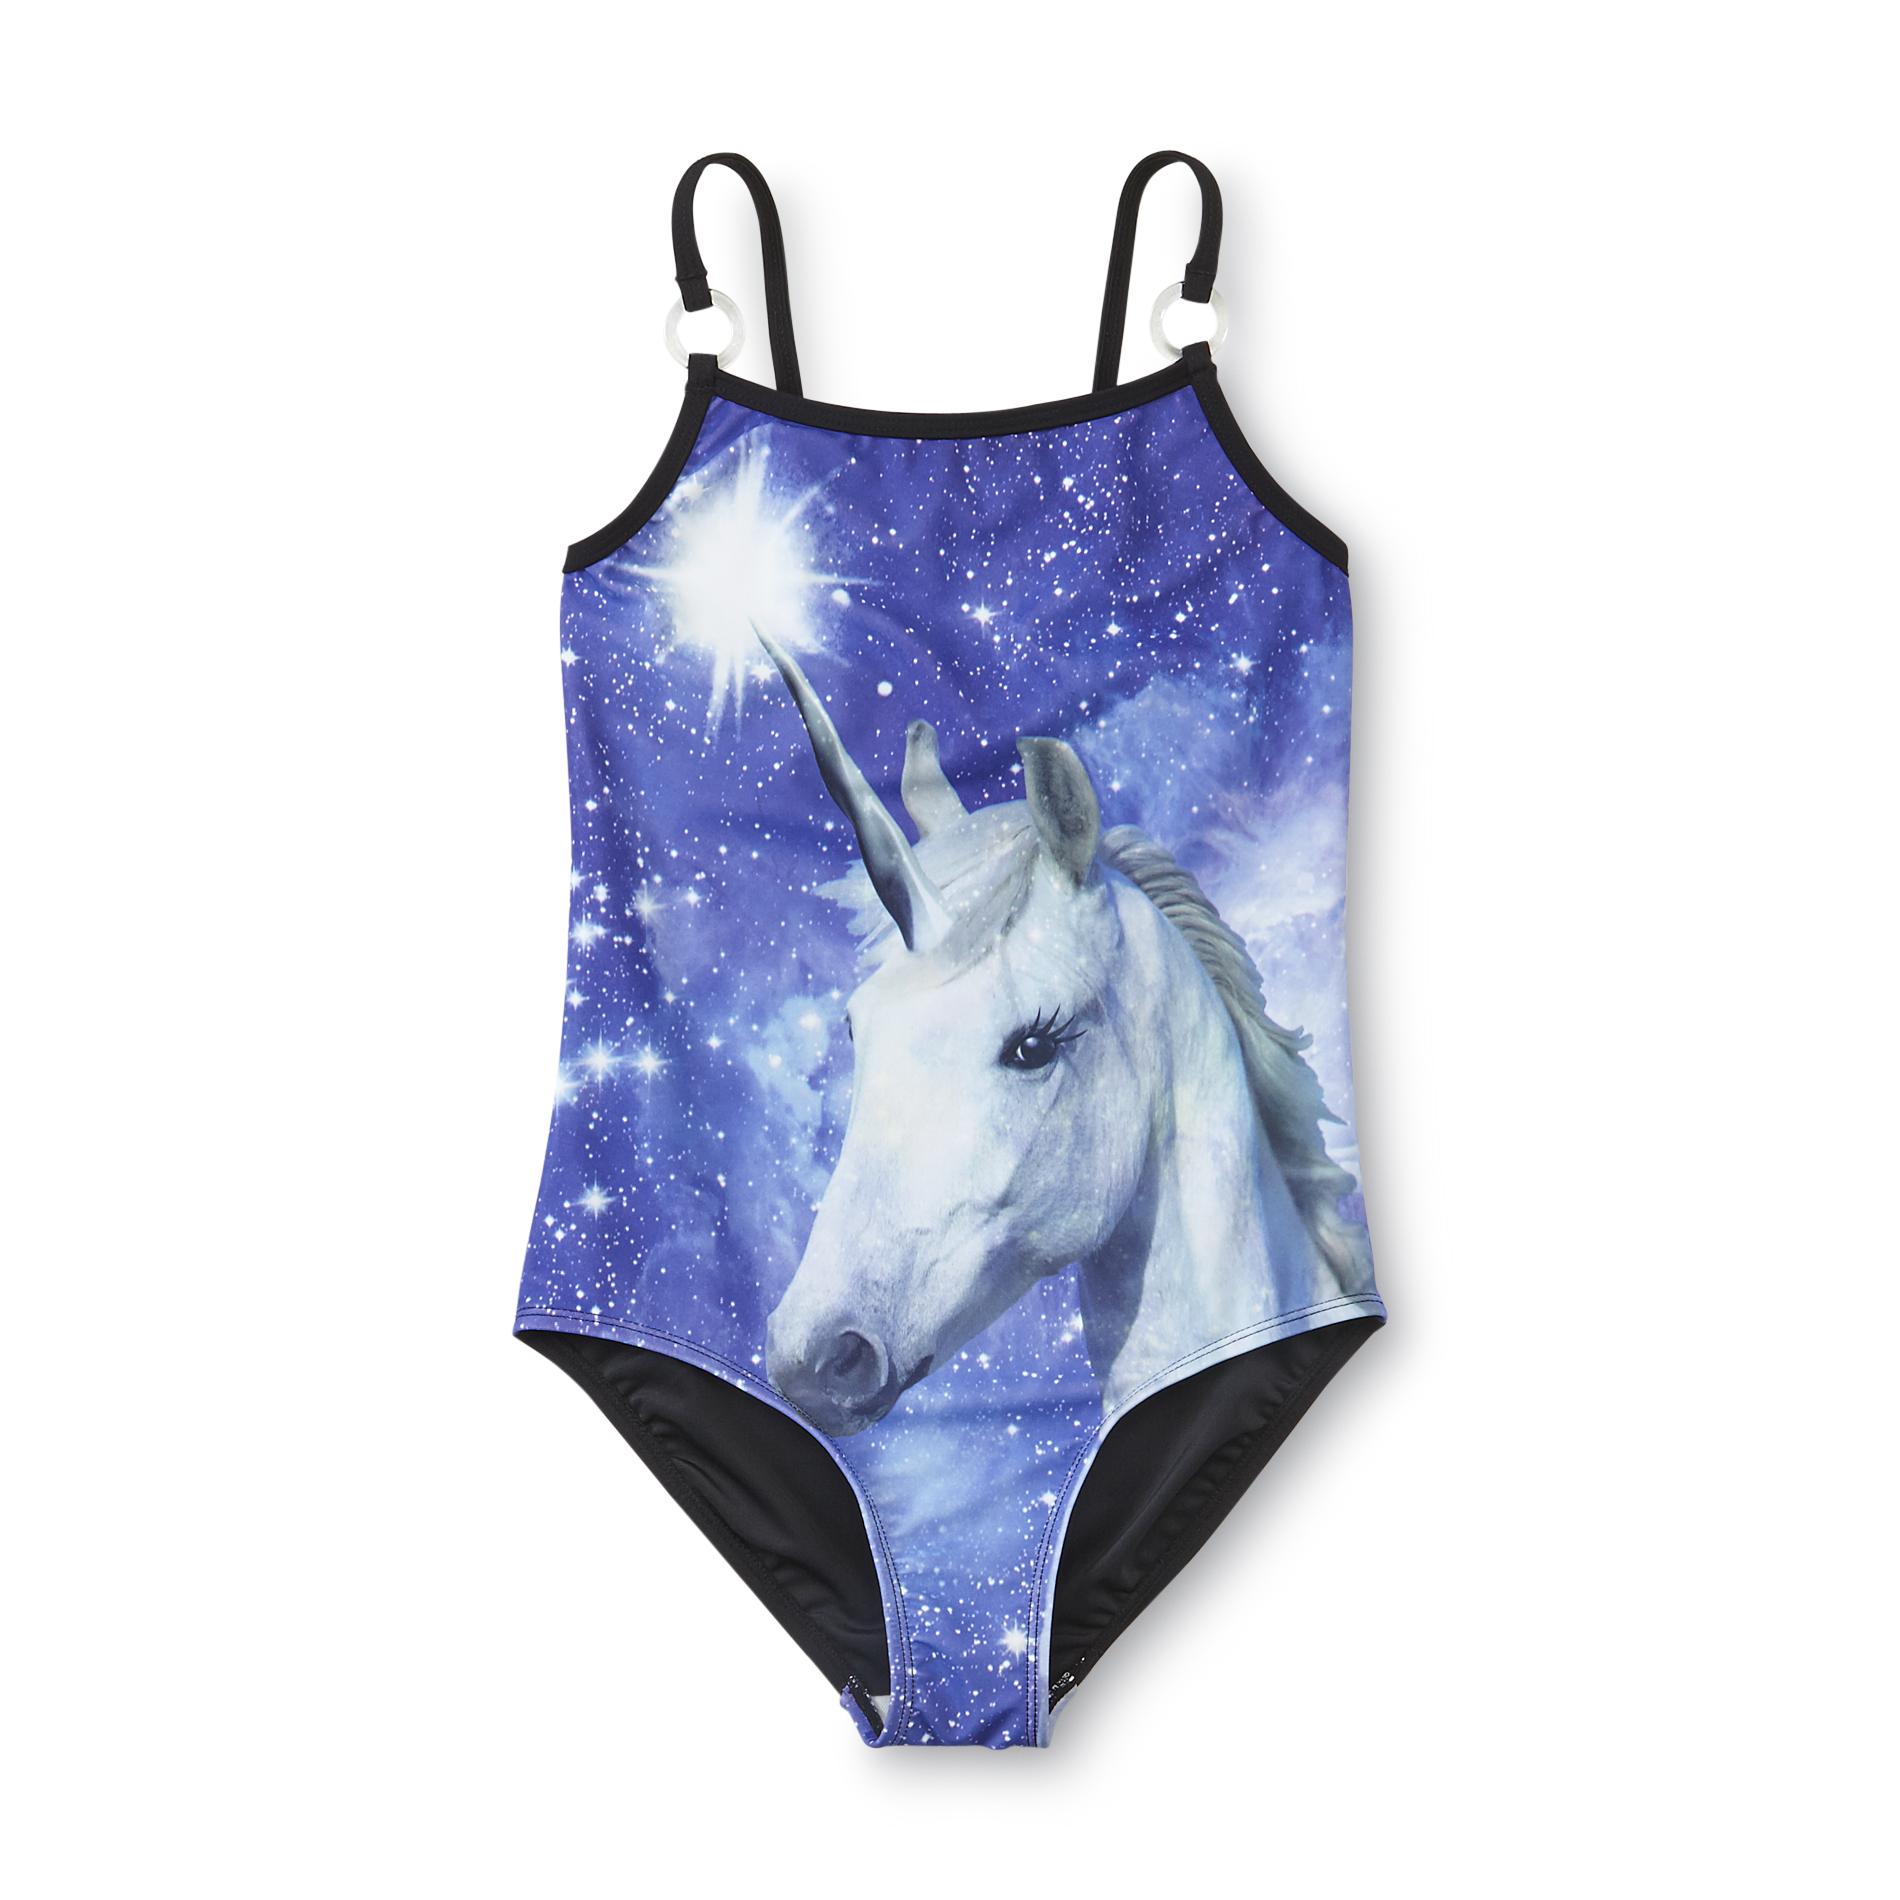 Joe Boxer Girl's Swimsuit - Unicorn